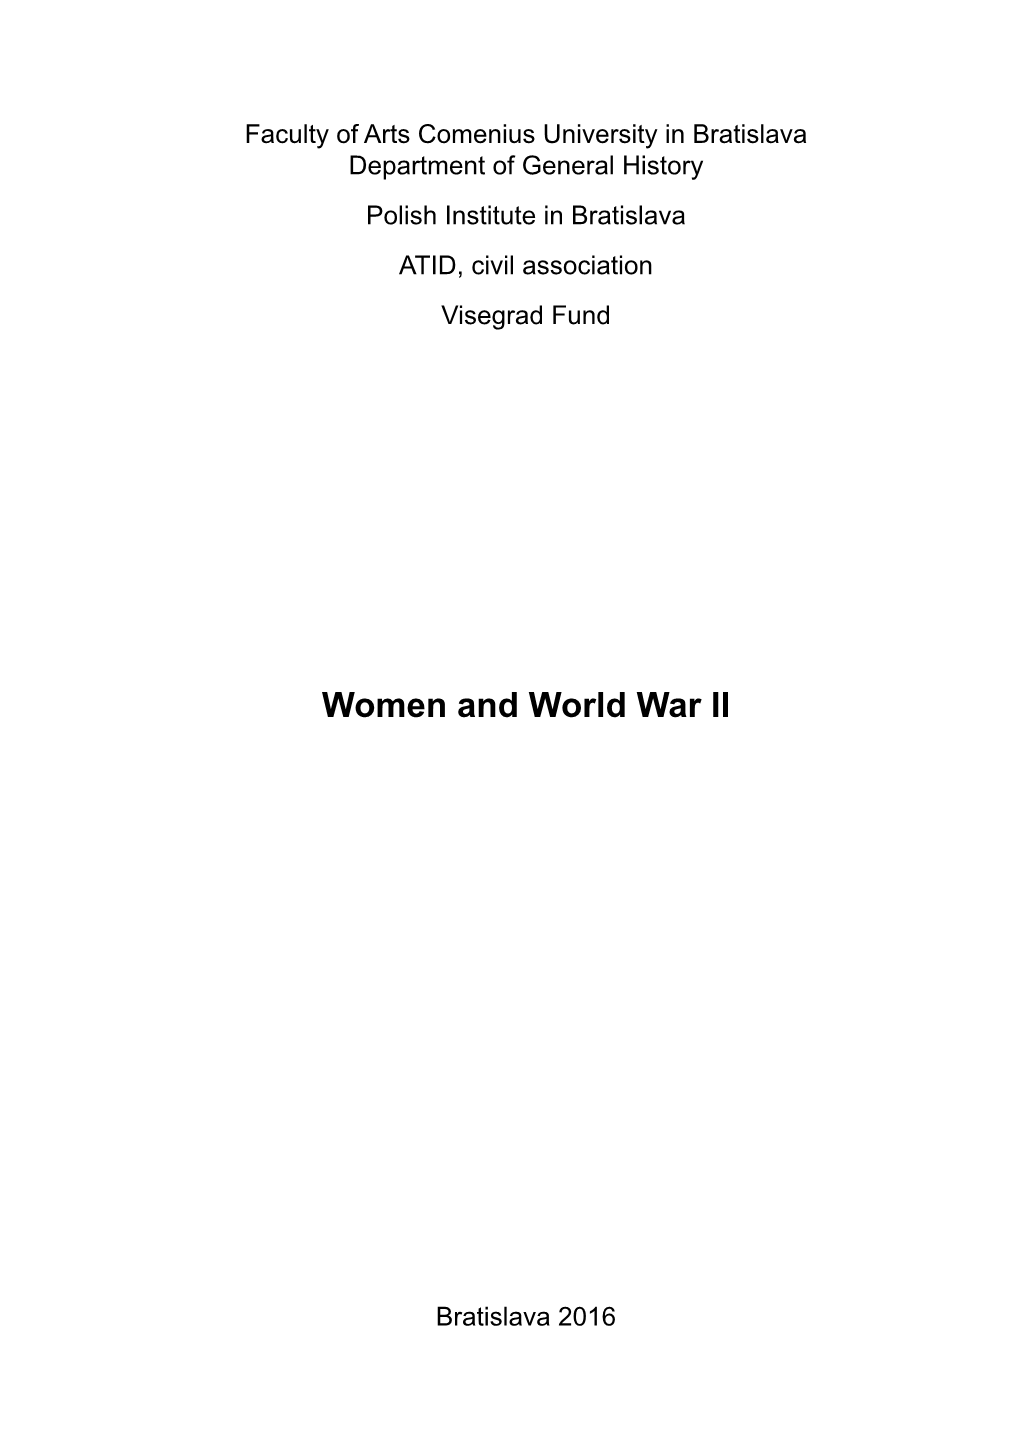 Women and World War II